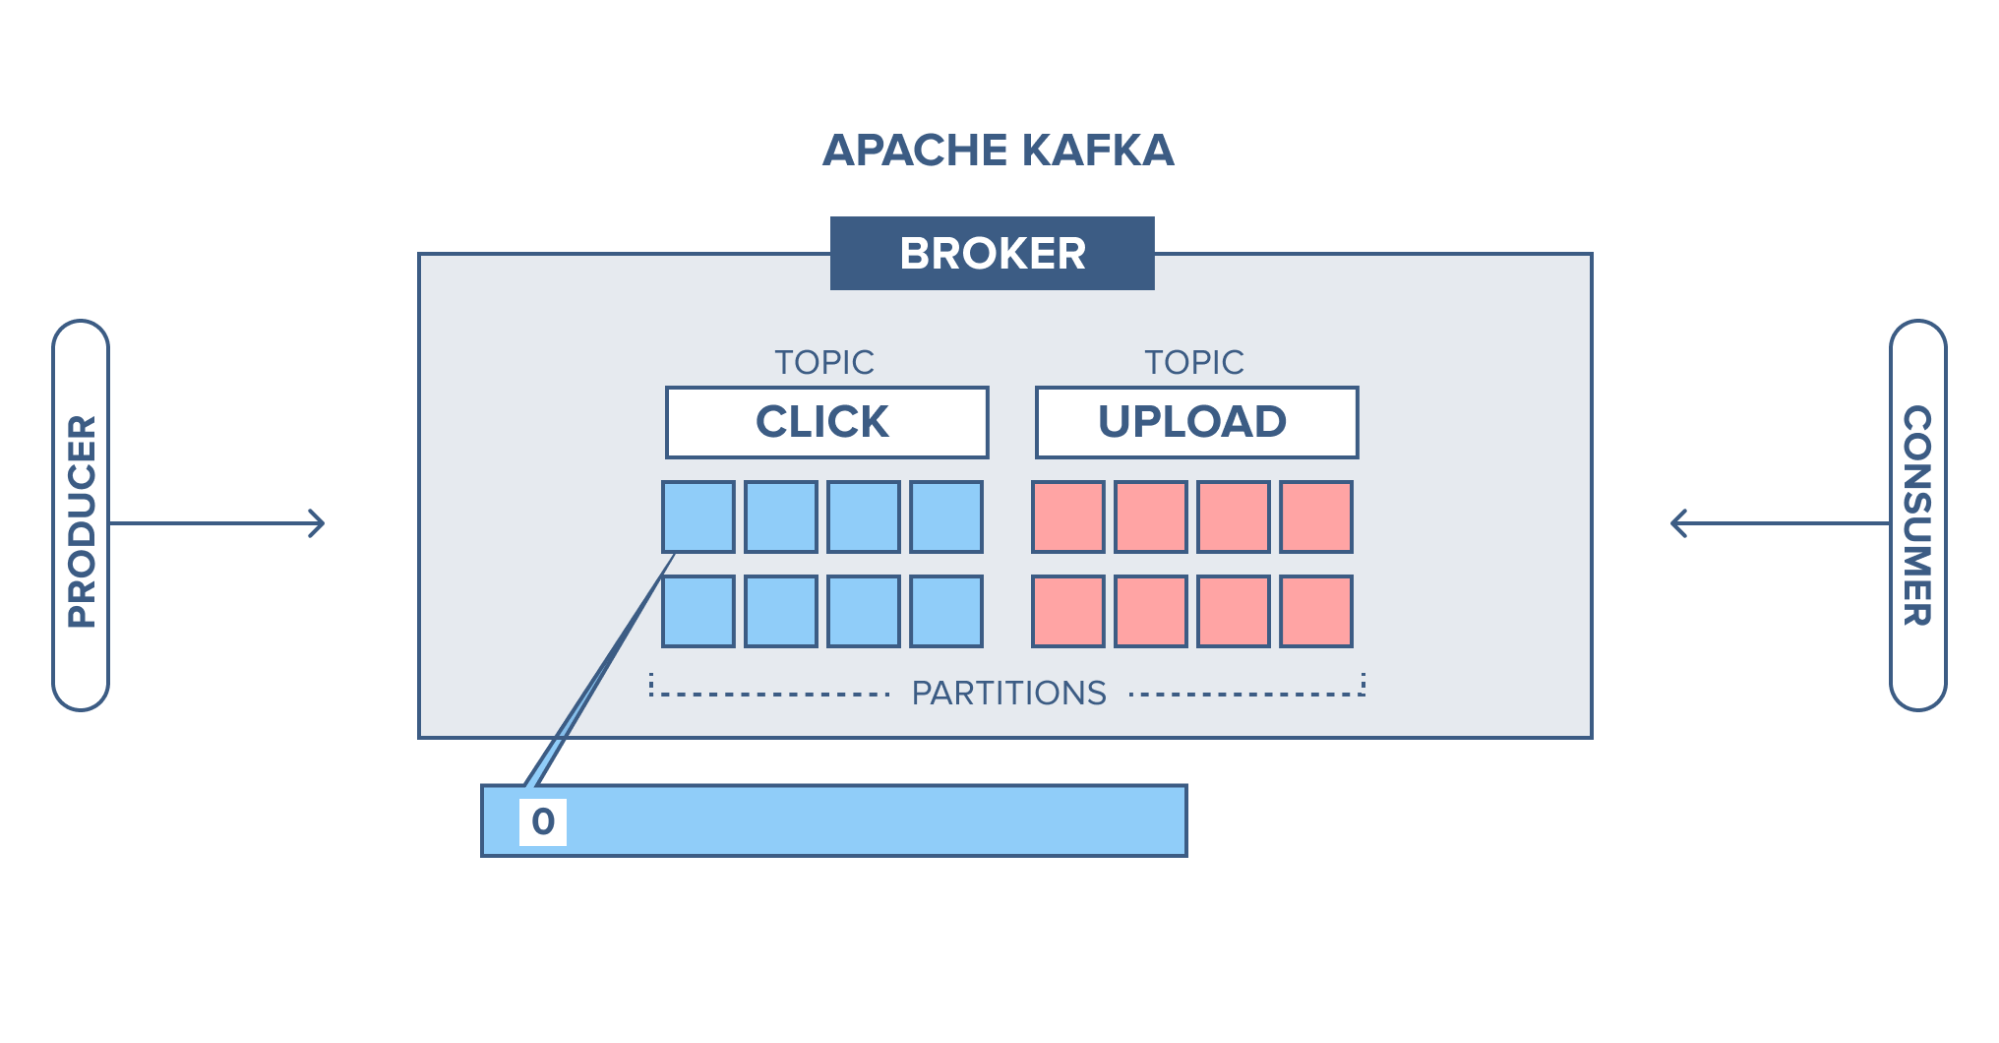 Apache Kafka Overview use case